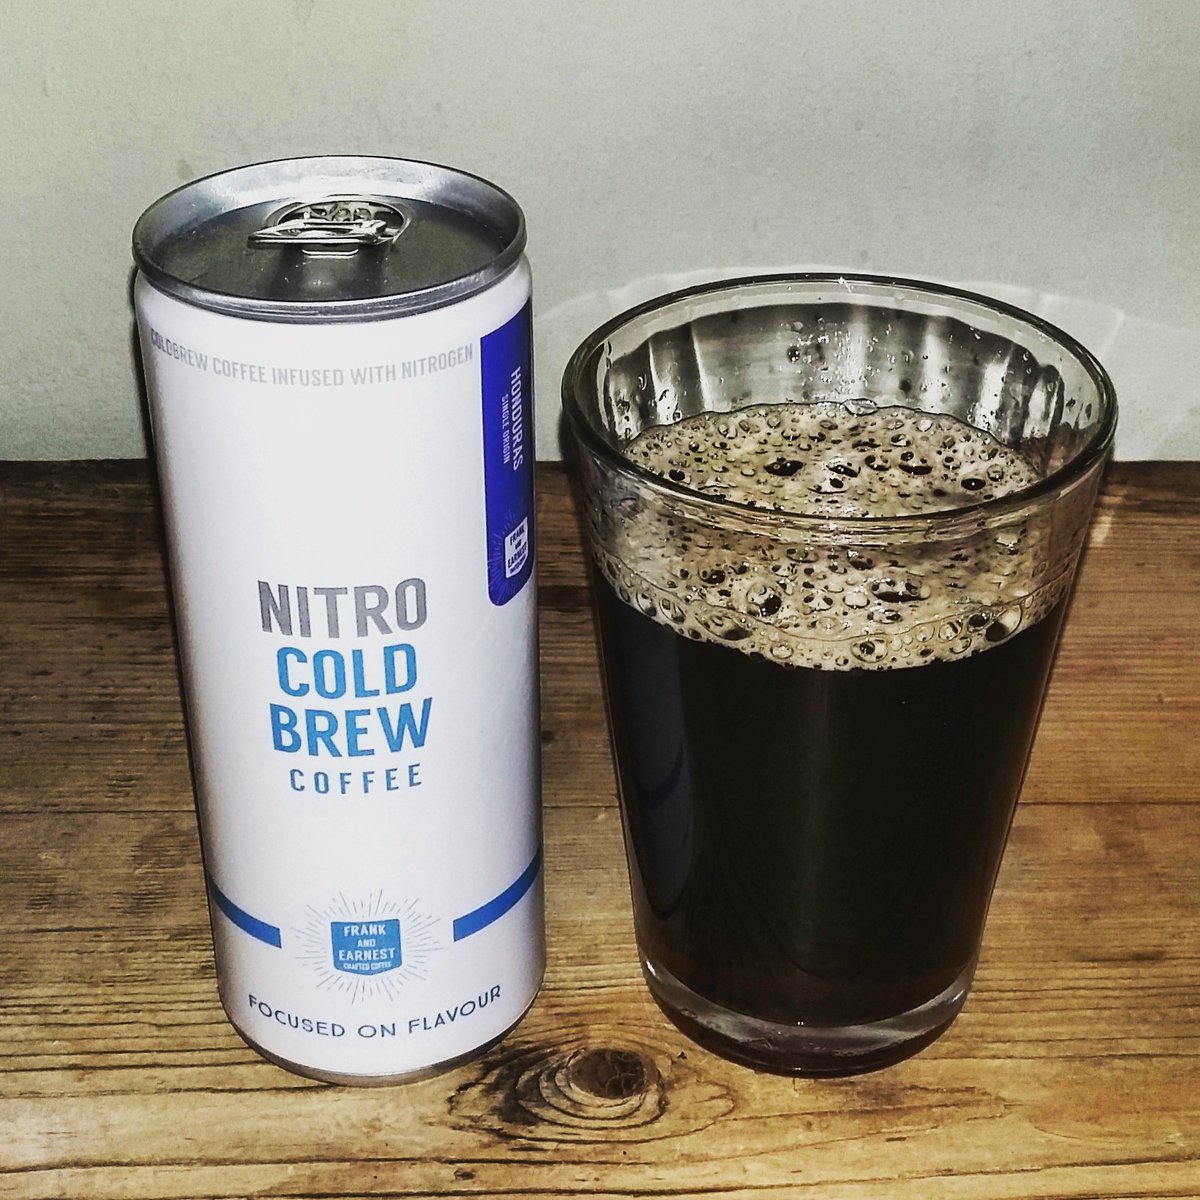 It's coffee, it's smooth, it's @FandEcoffee Nitro Cold Brew Coffee.